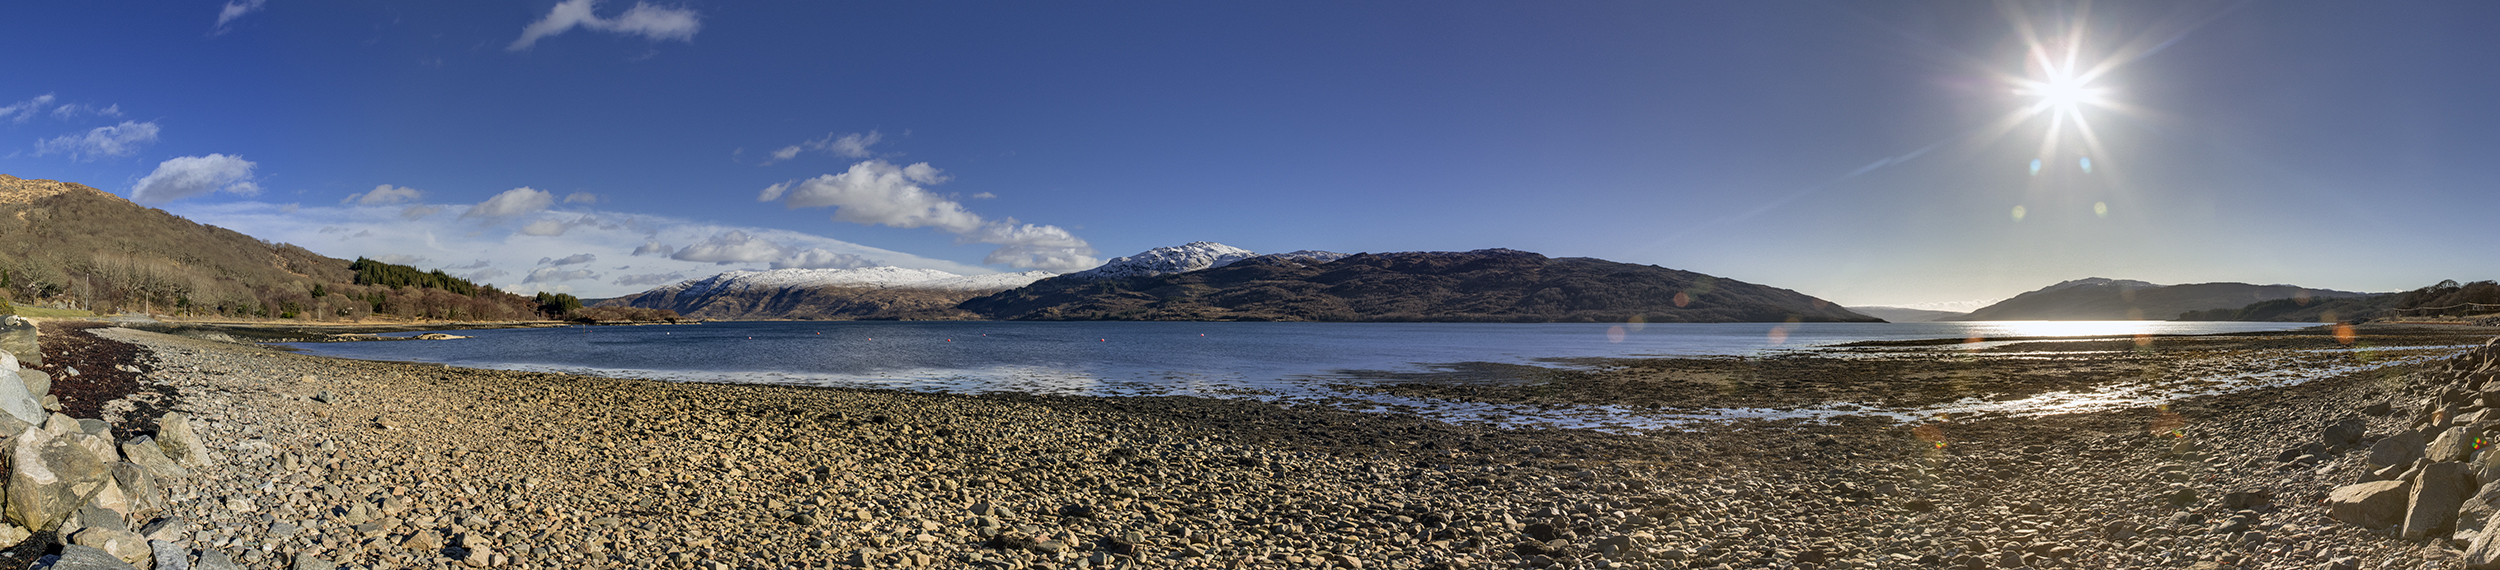 Panorama looking over Loch Sunart